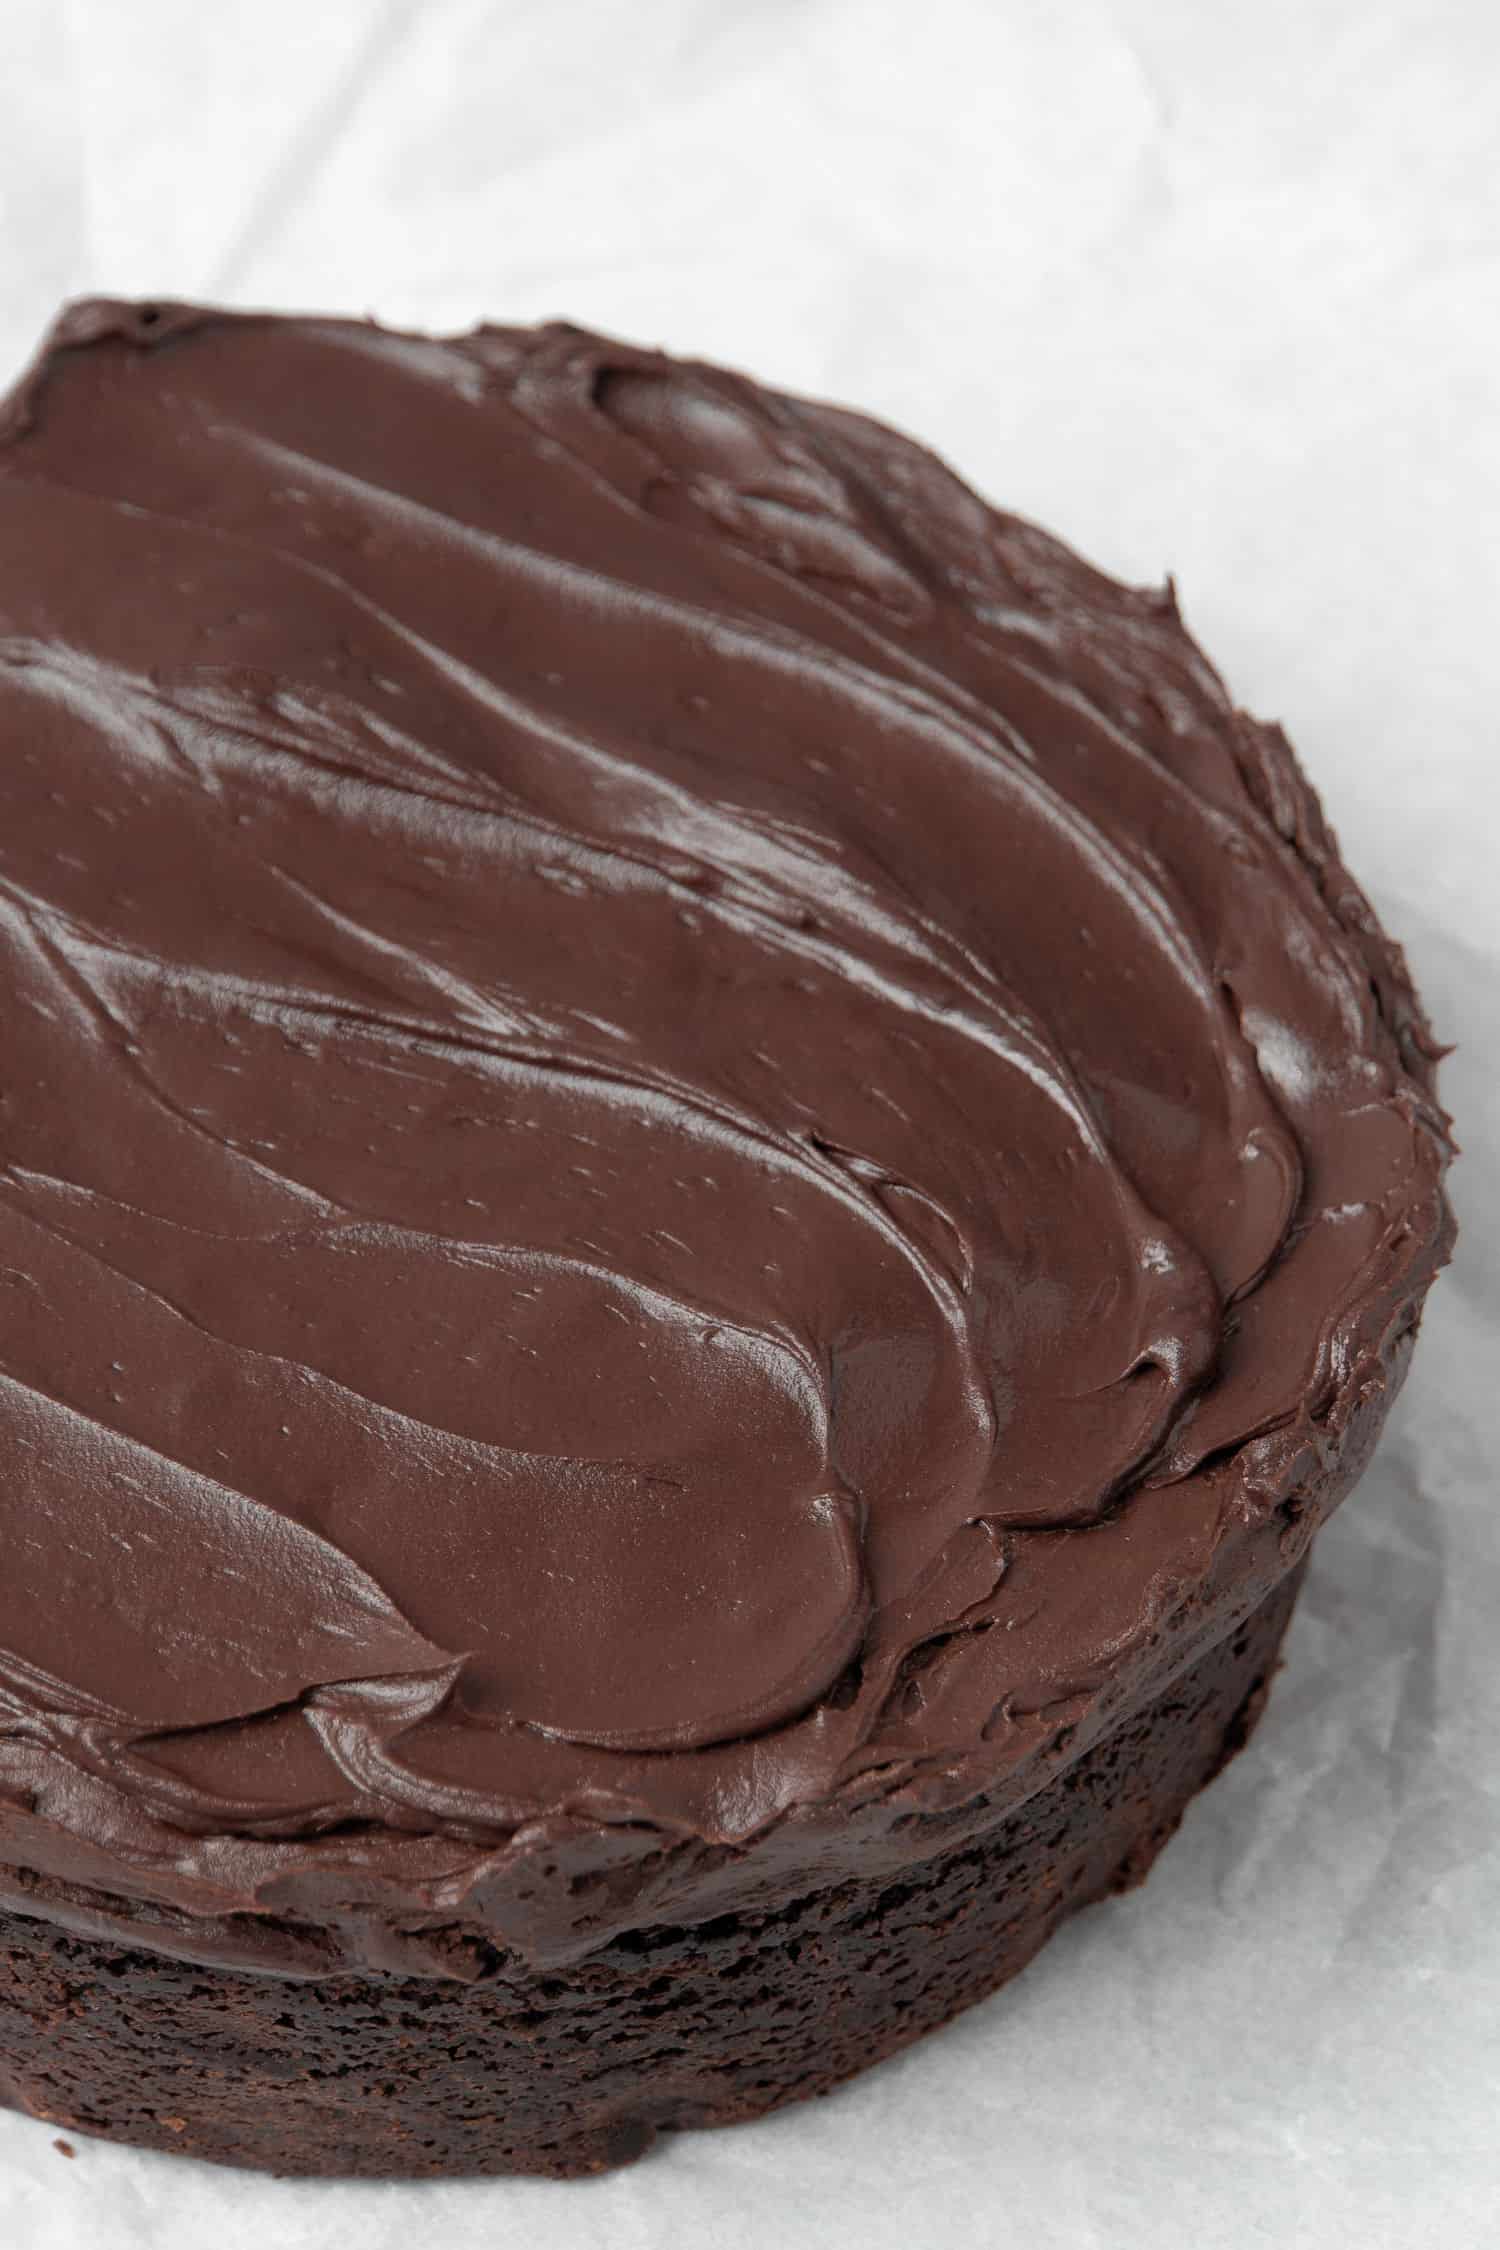 Helen Goh Chocolate cake.